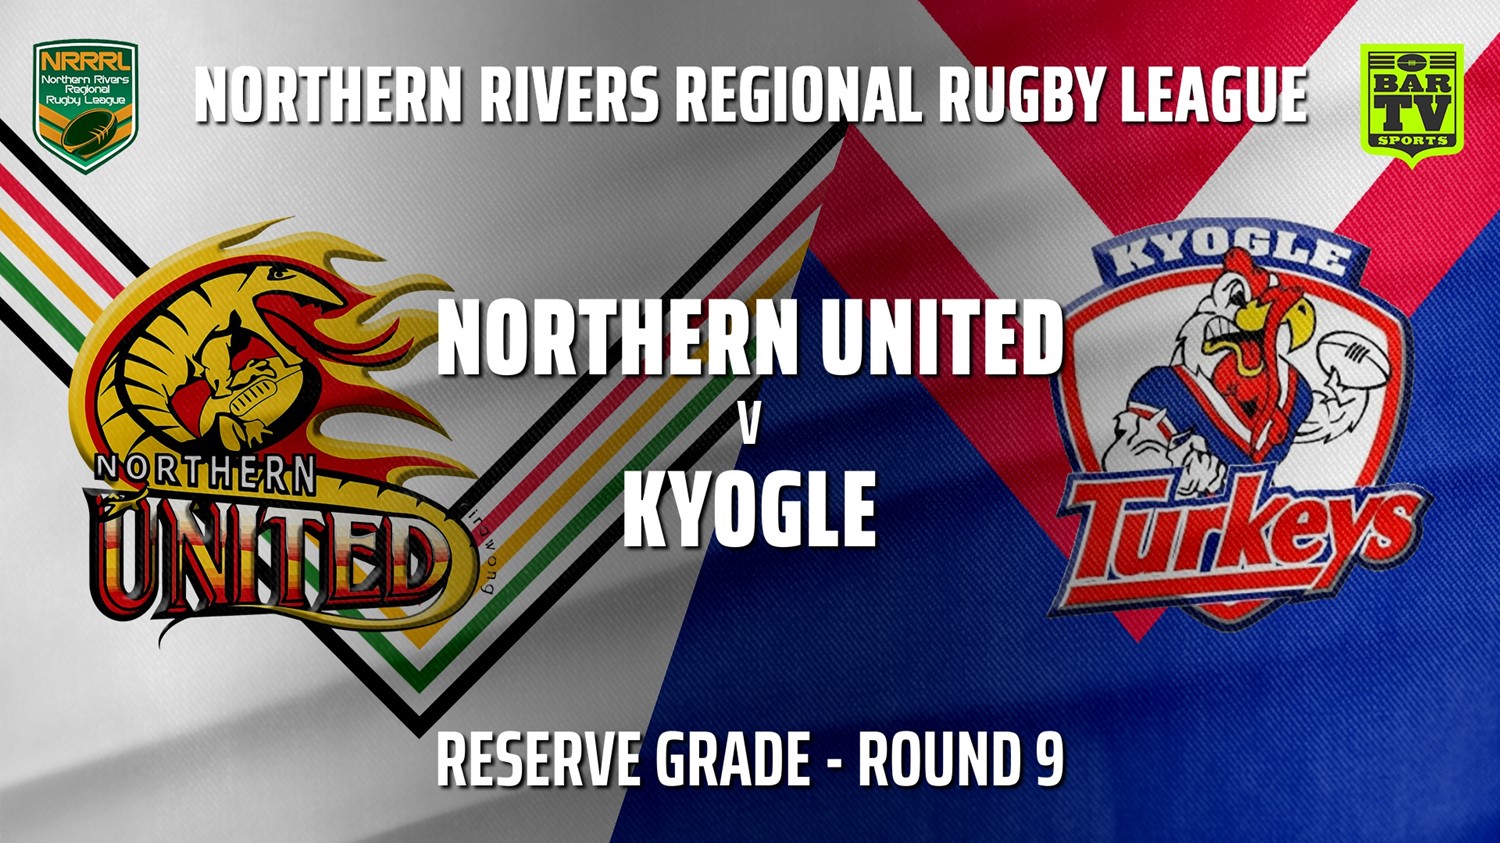 210703-Northern Rivers Round 9 - Reserve Grade - Northern United v Kyogle Turkeys Slate Image